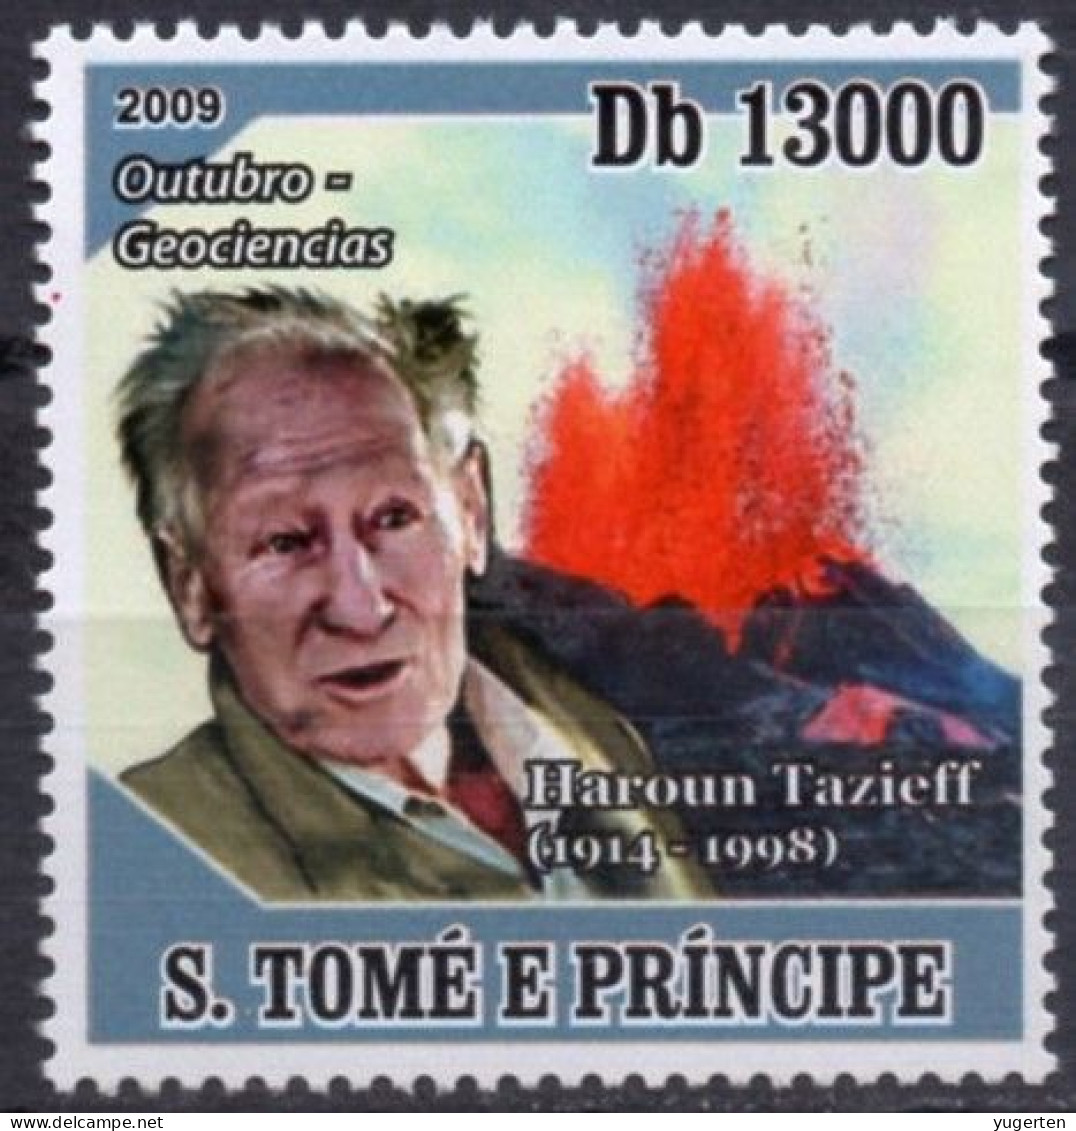 SAO TOME 2009 - 1v - MNH - Haroun Tazieff - Volcanos - Disasters - Geology - France - Volcans Vulkane Volcanes Vulcani - Volcans